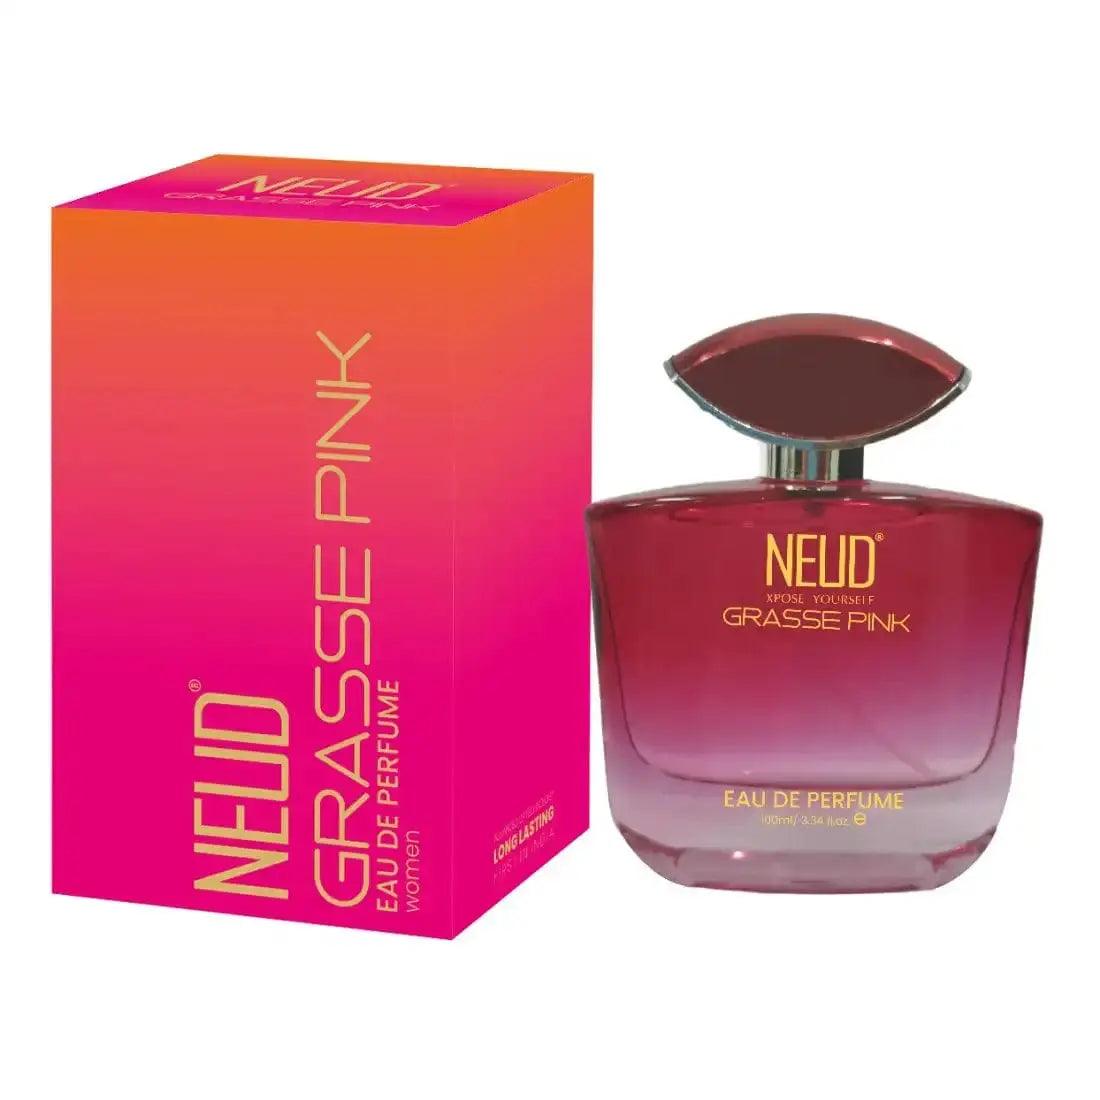 NEUD Grasse Pink Luxury Perfume for Modern Women - 100ml Long Lasting EDP